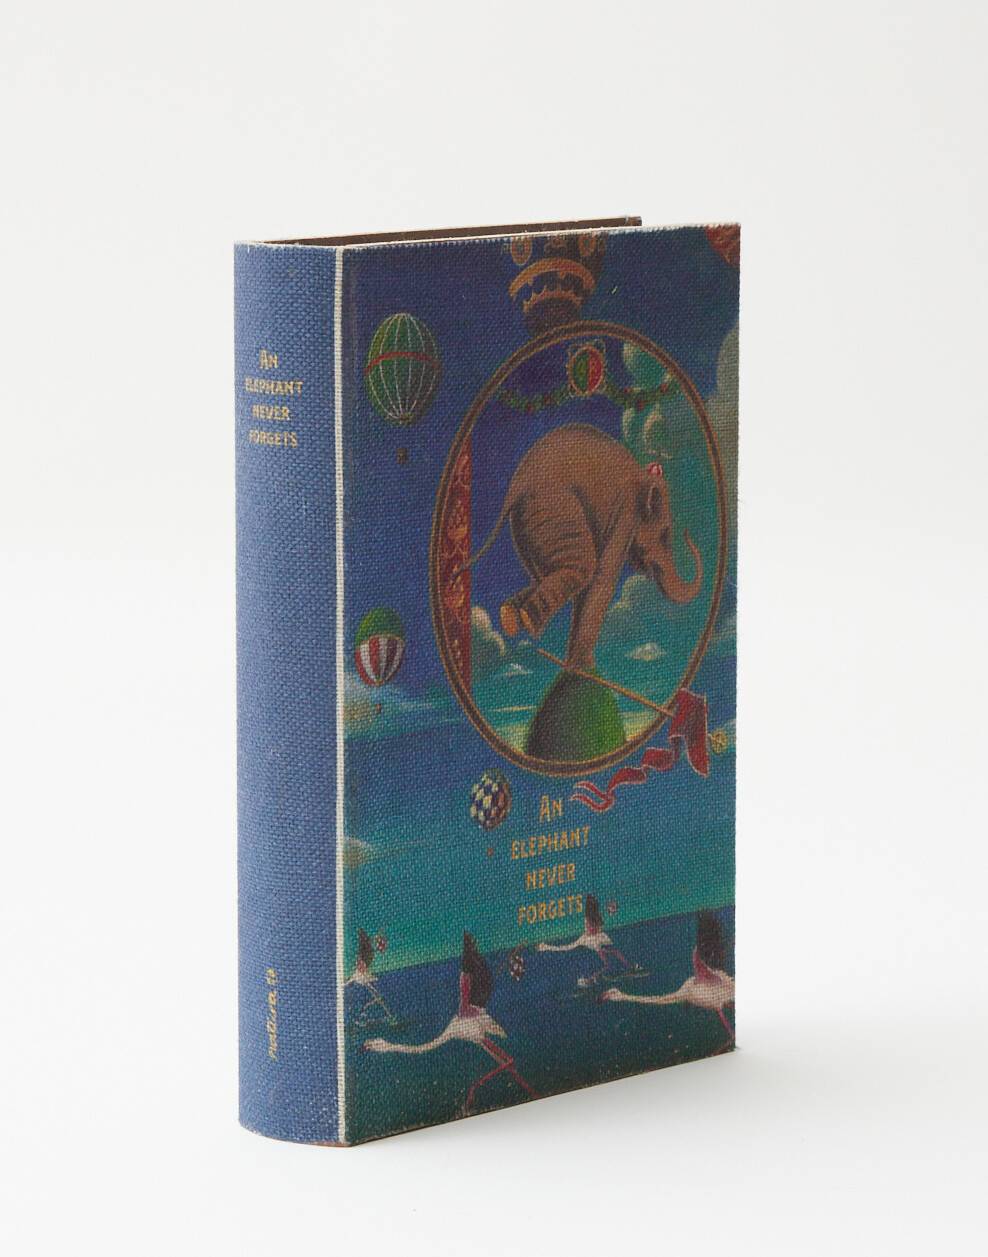 Elephant book-shaped box